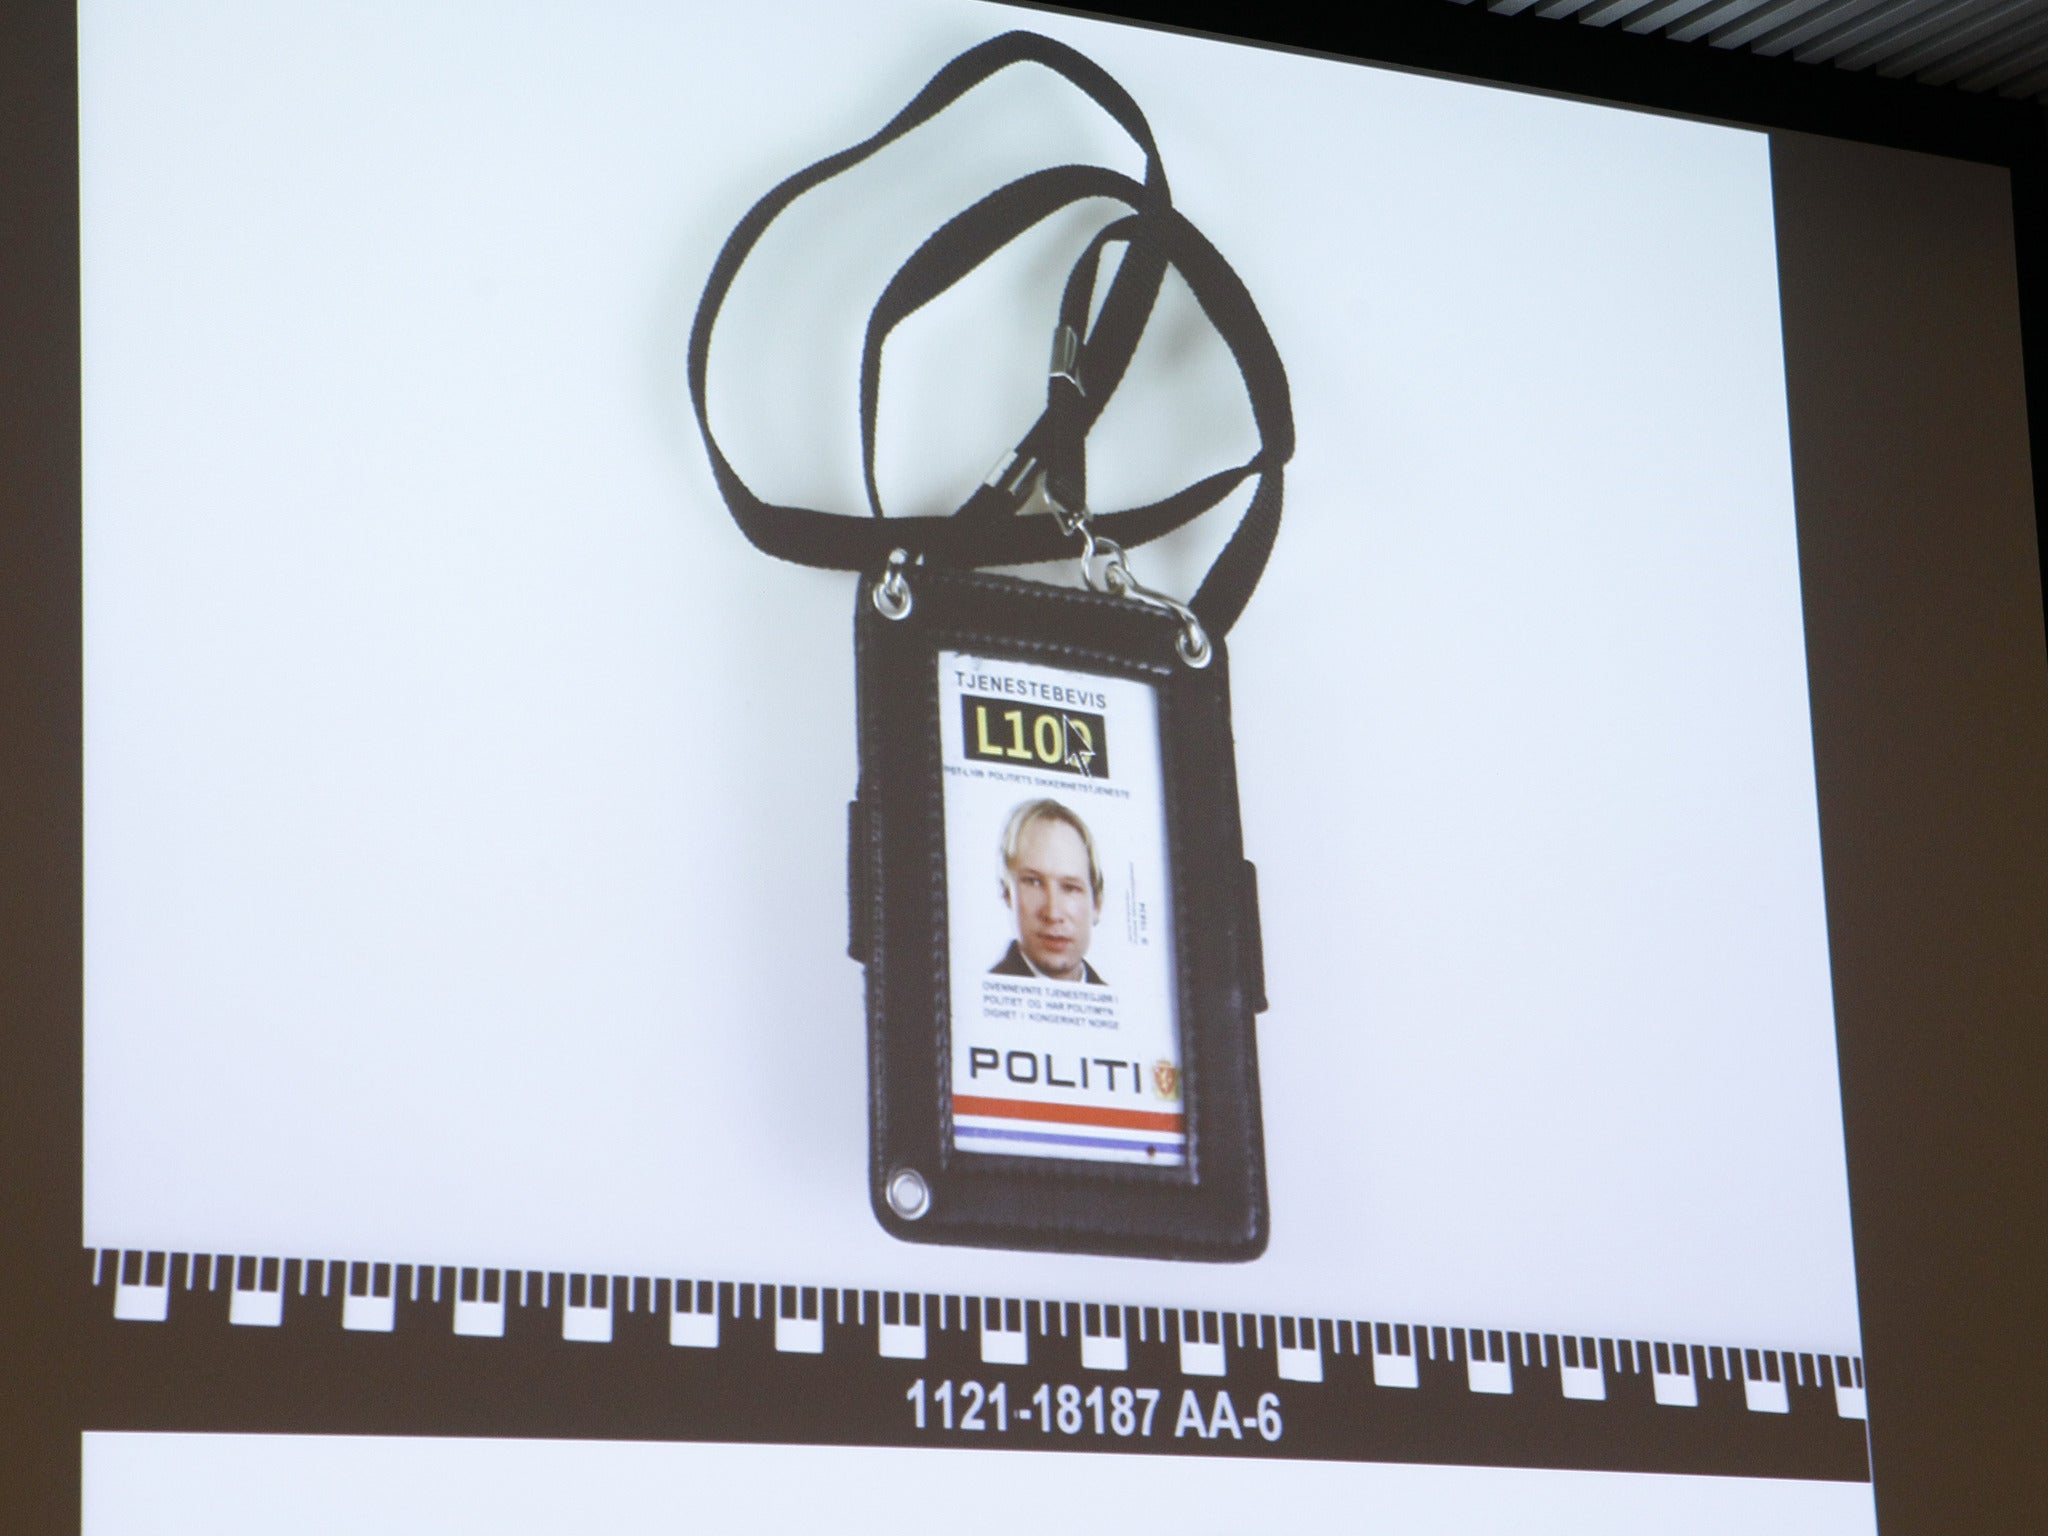 Breivik used a fake police ID to gain access to a youth camp on Utoeya island where he killed 69 people